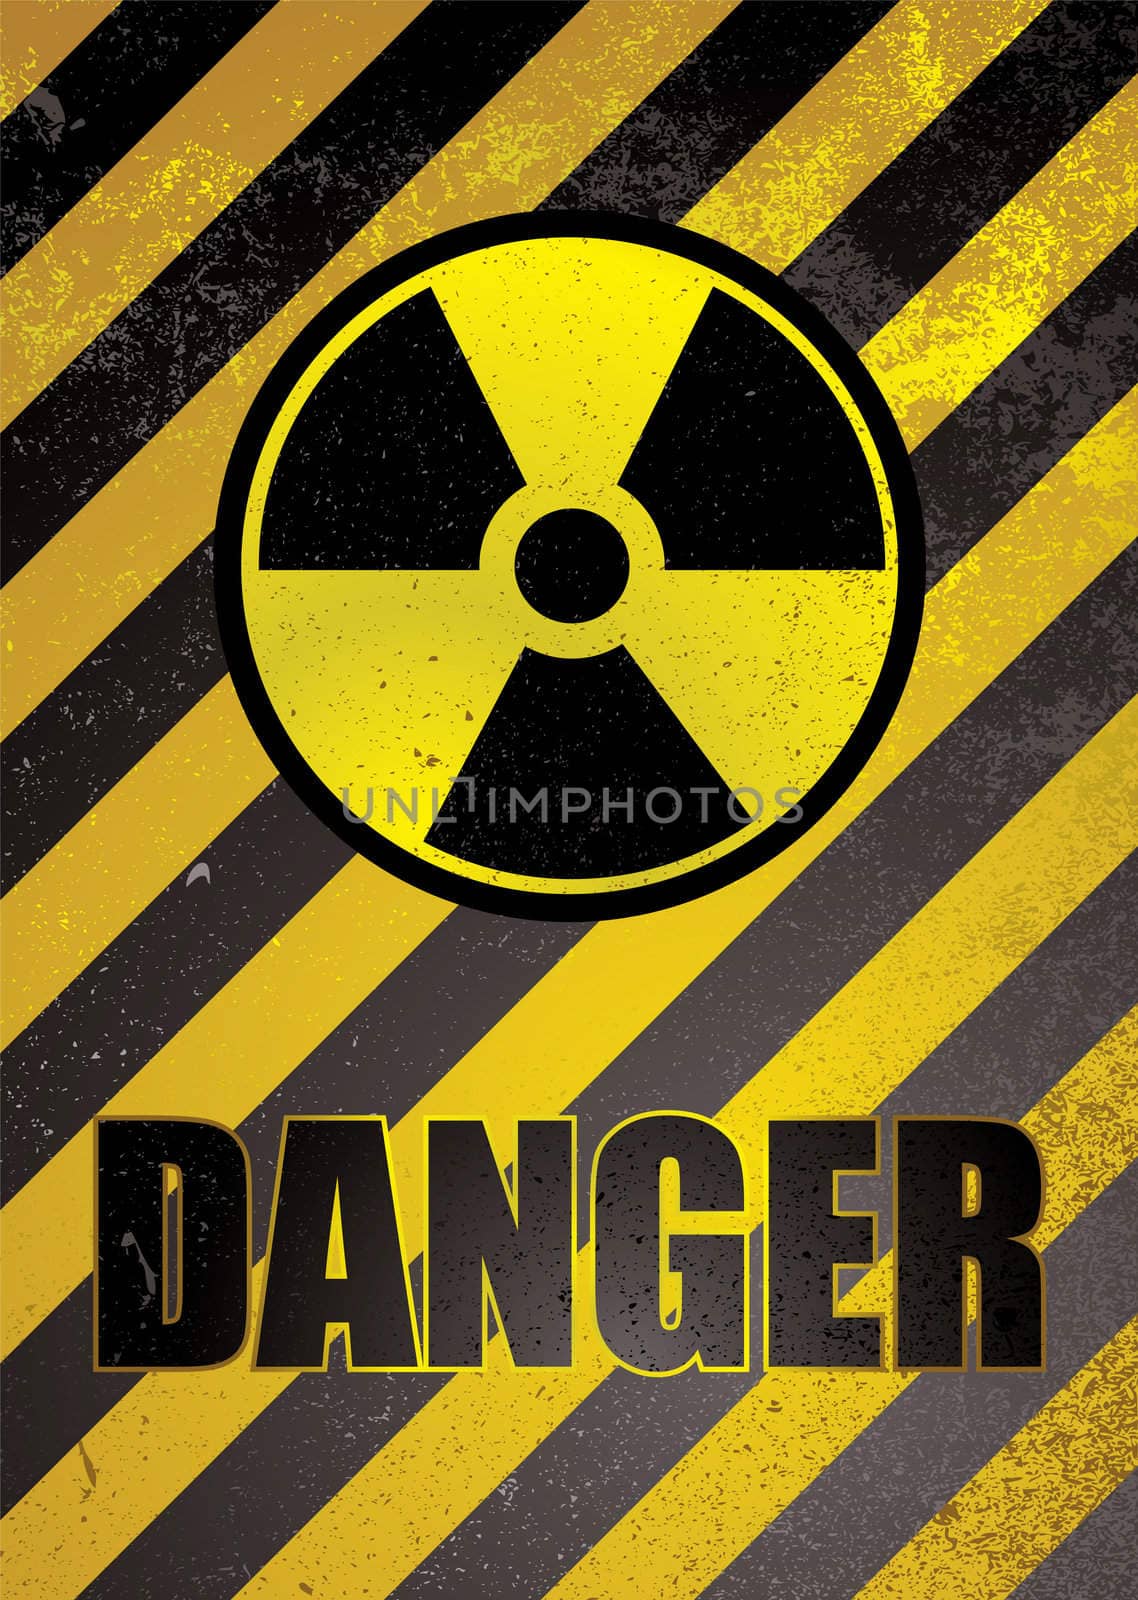 danger poster by nicemonkey